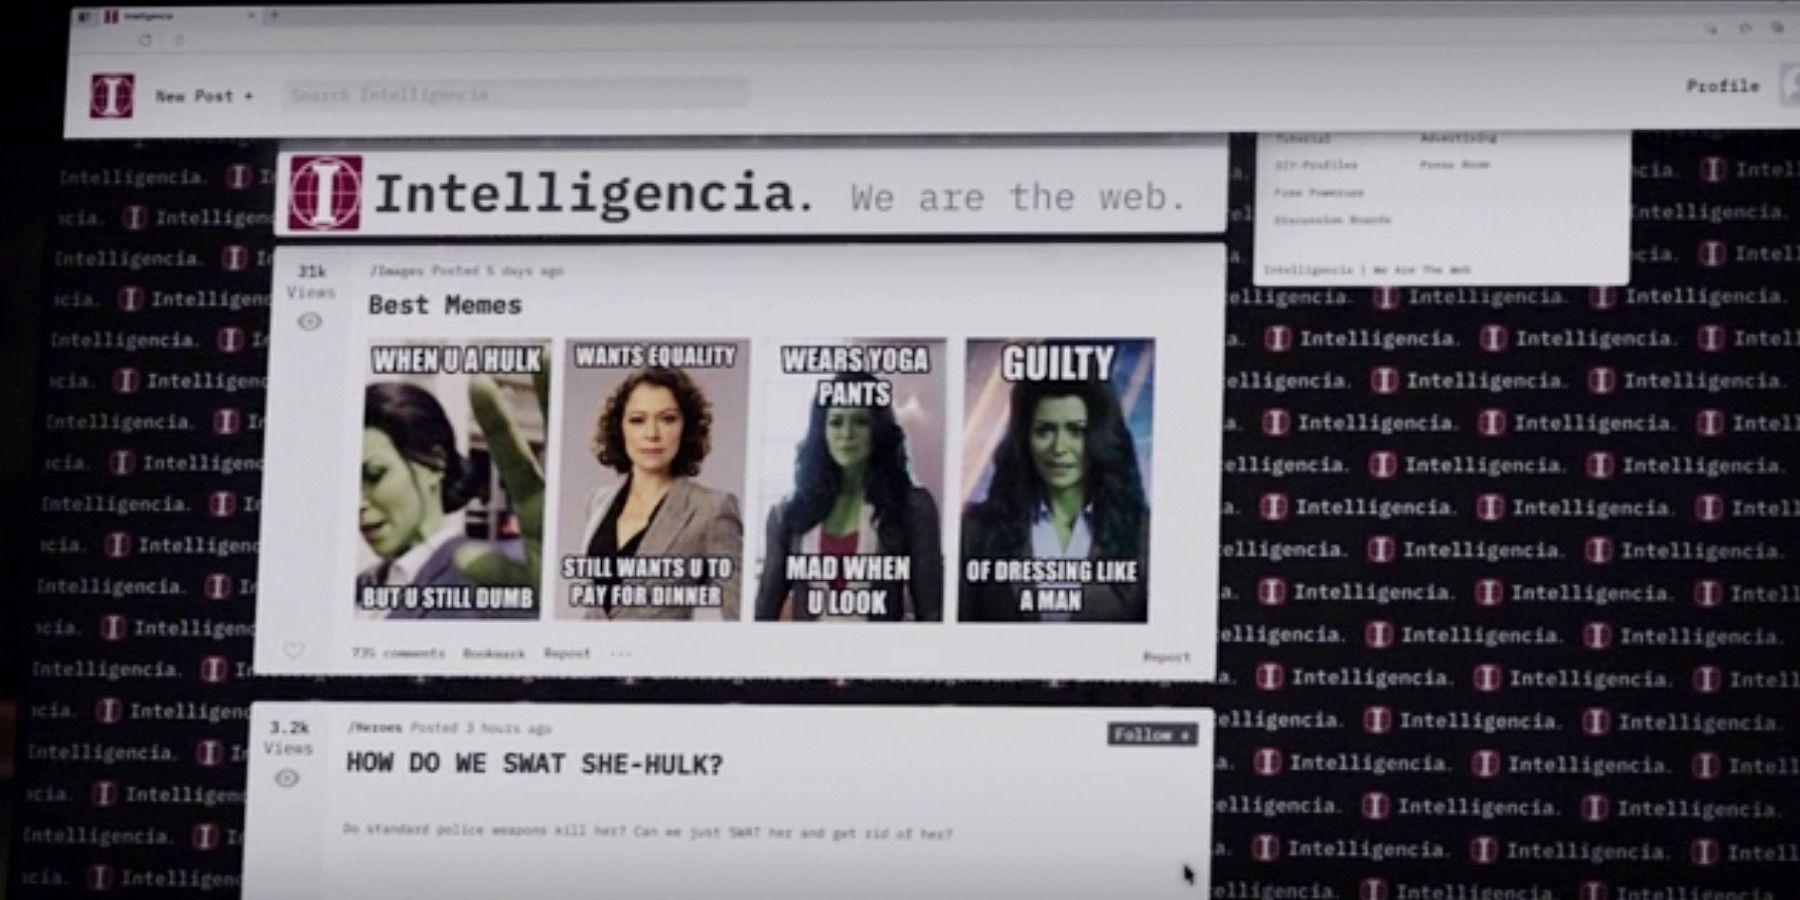 She-Hulk's Intelligencia website online harassment home page